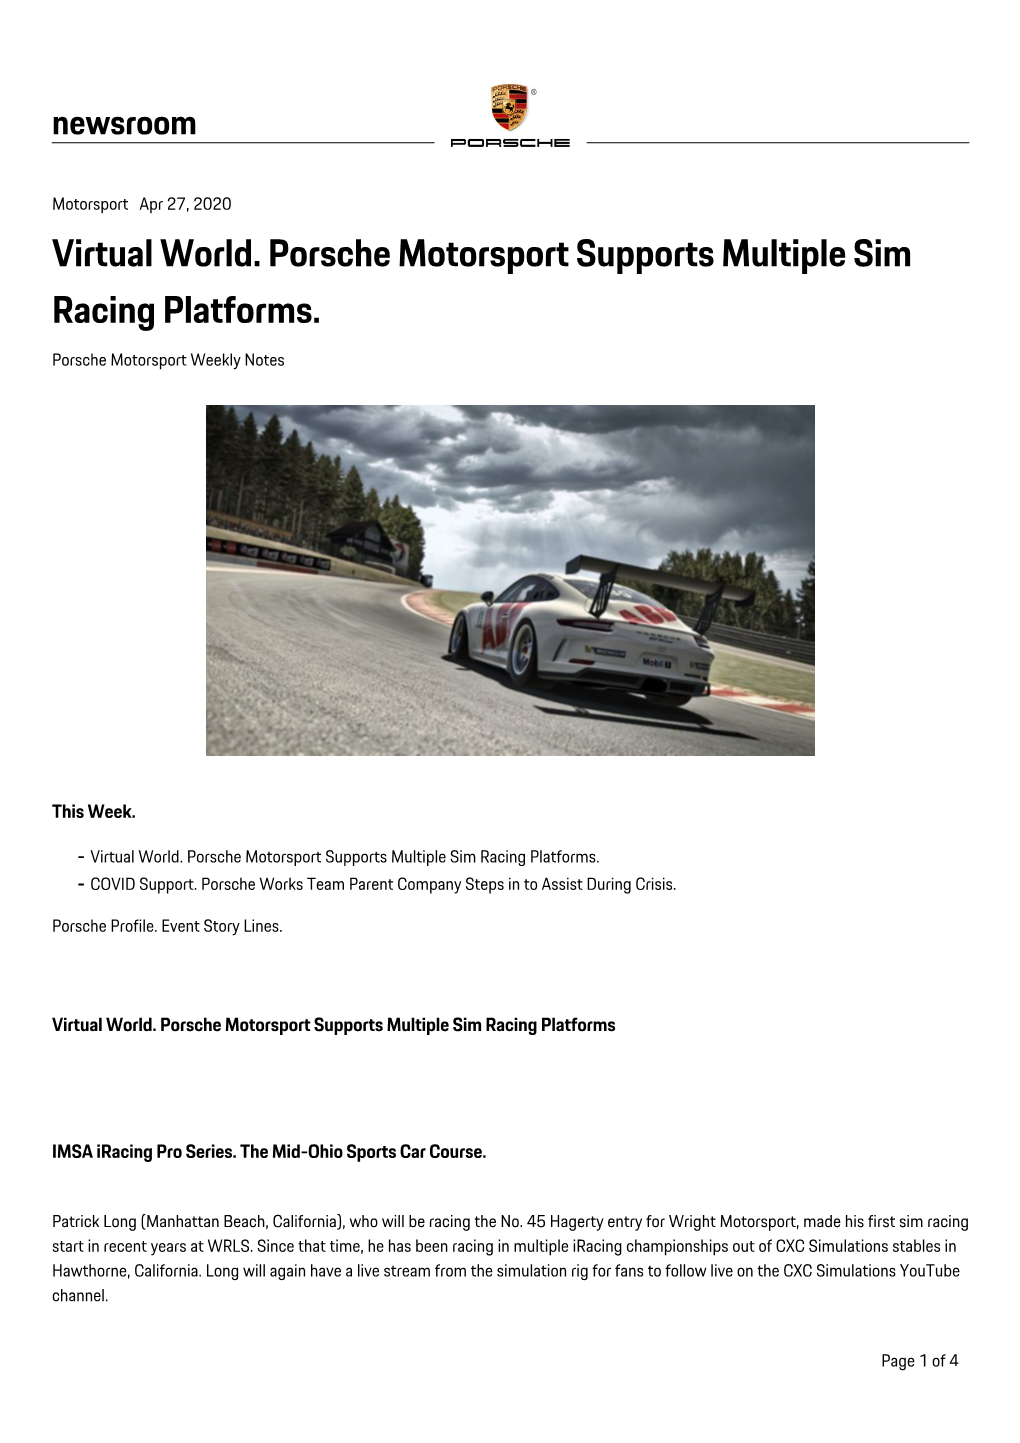 Virtual World. Porsche Motorsport Supports Multiple Sim Racing Platforms